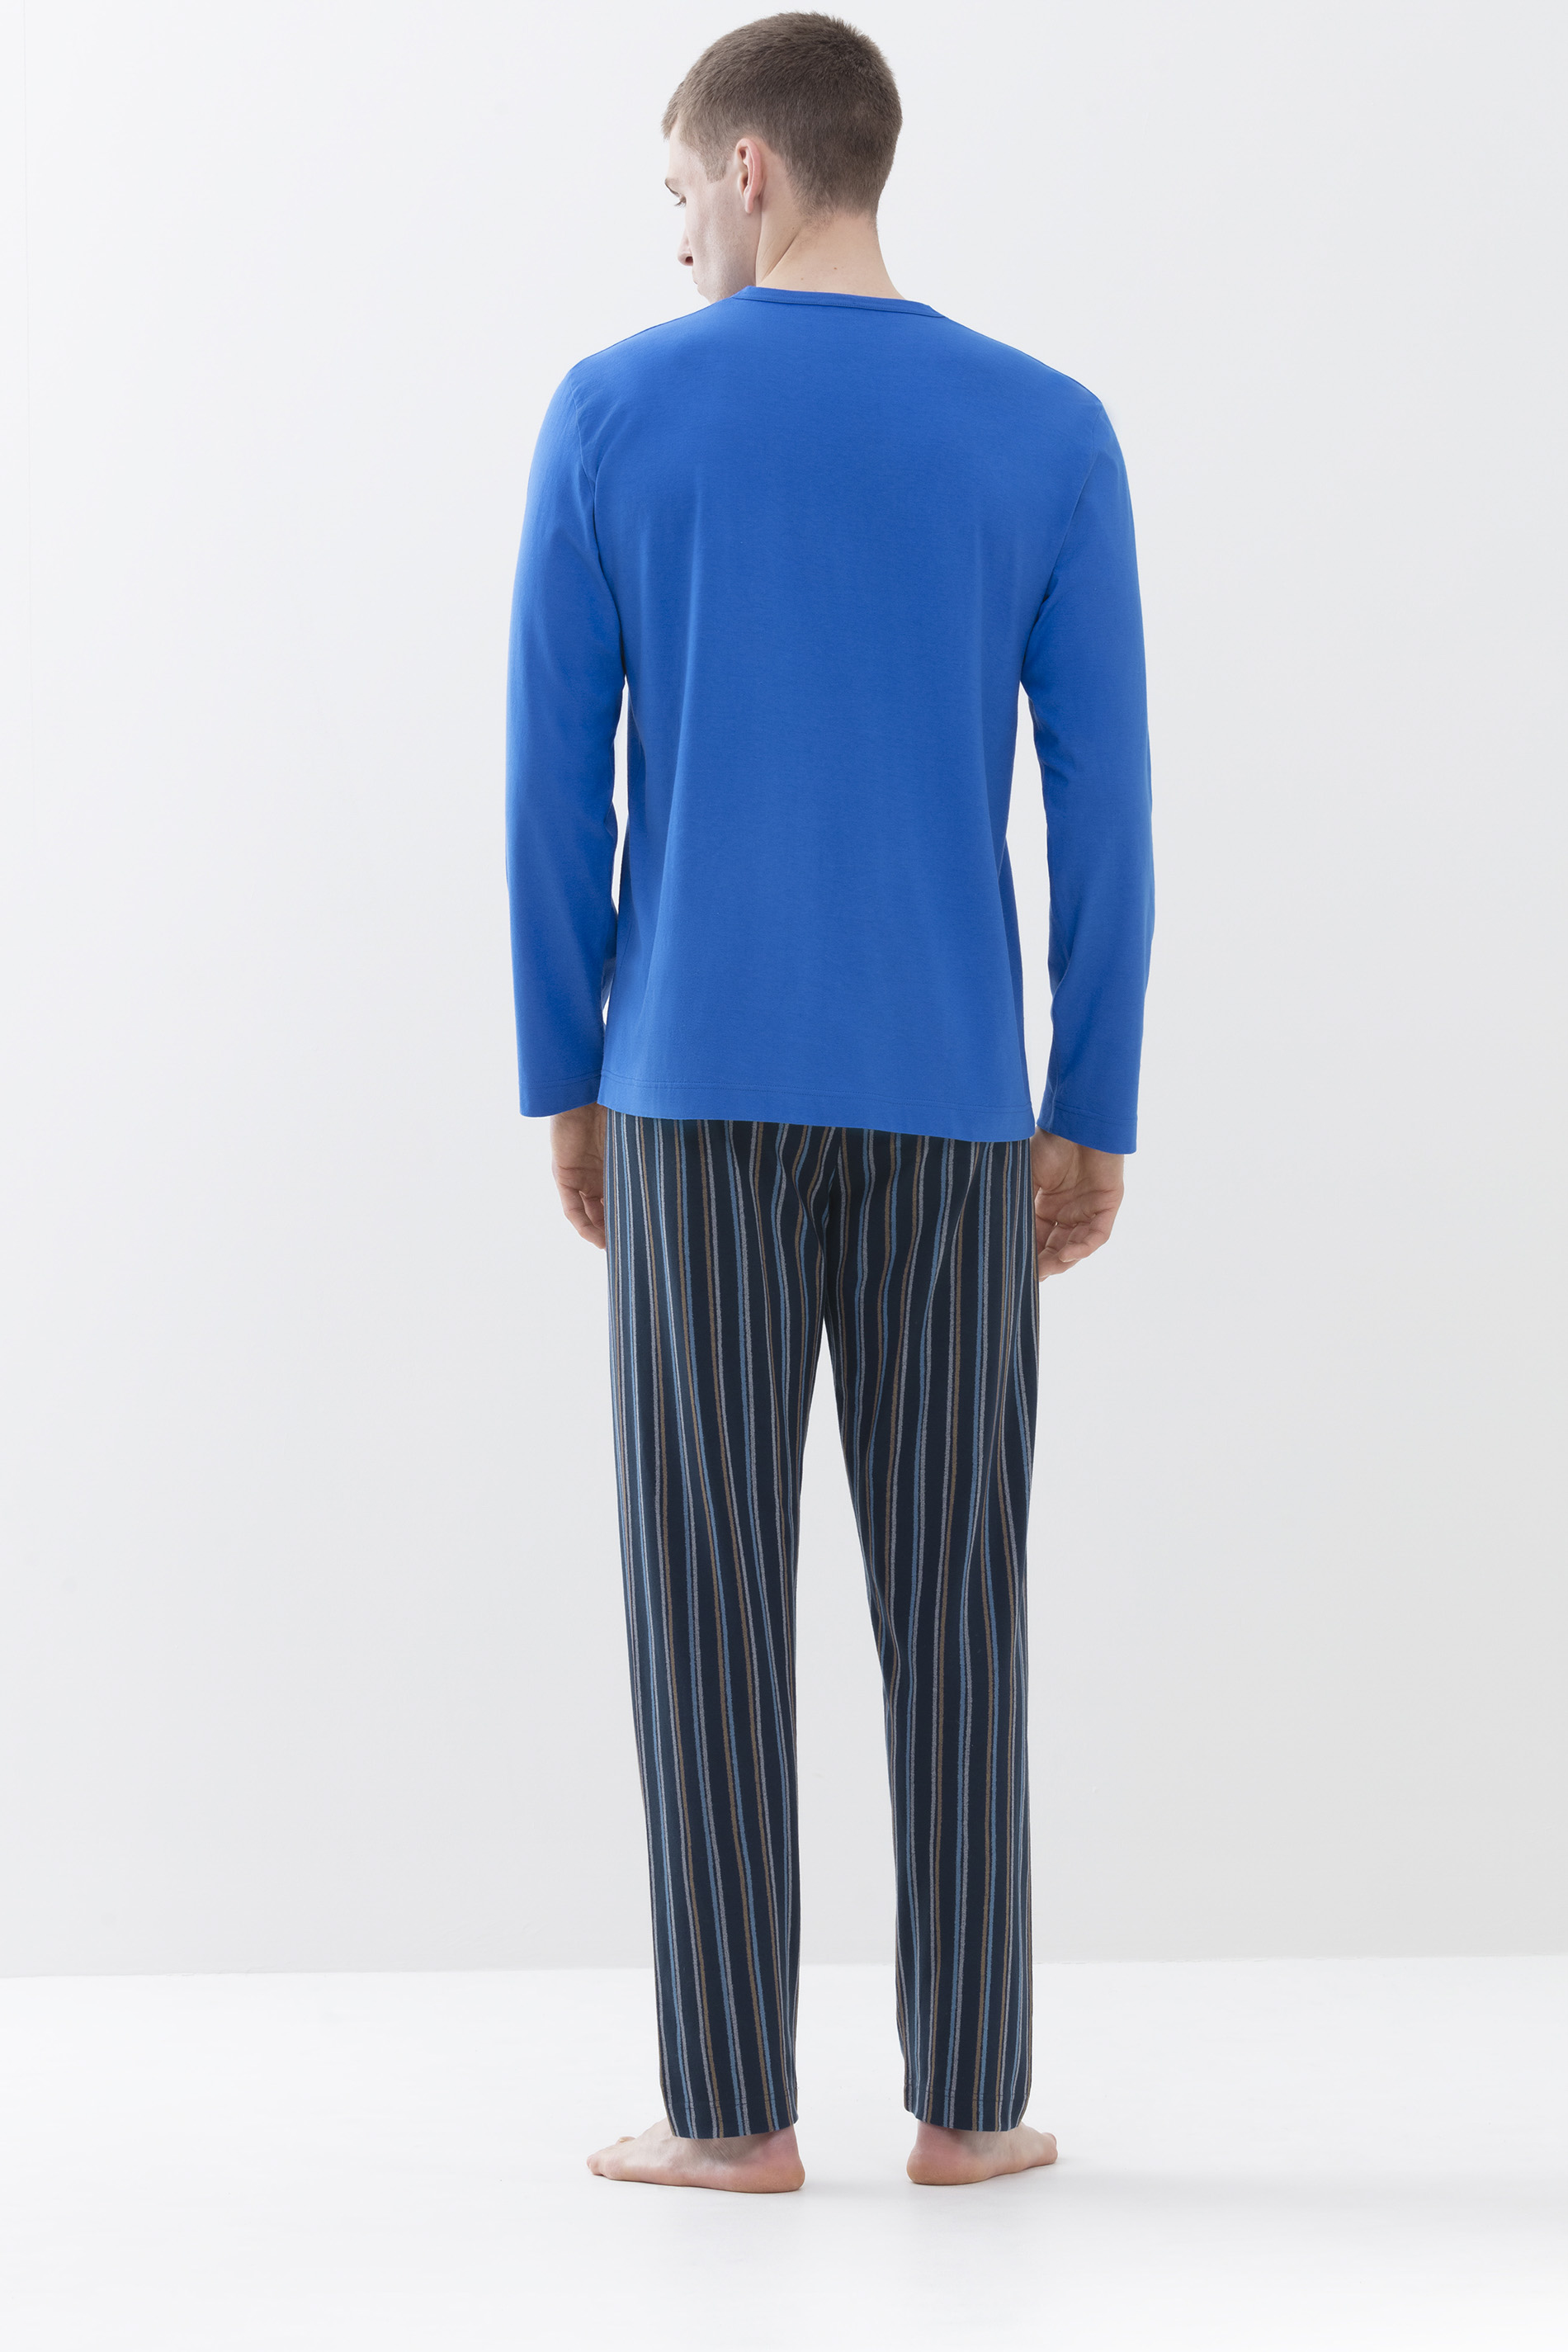 Pyjama Porcelain Blue Serie Unregular Stripes Achteraanzicht | mey®